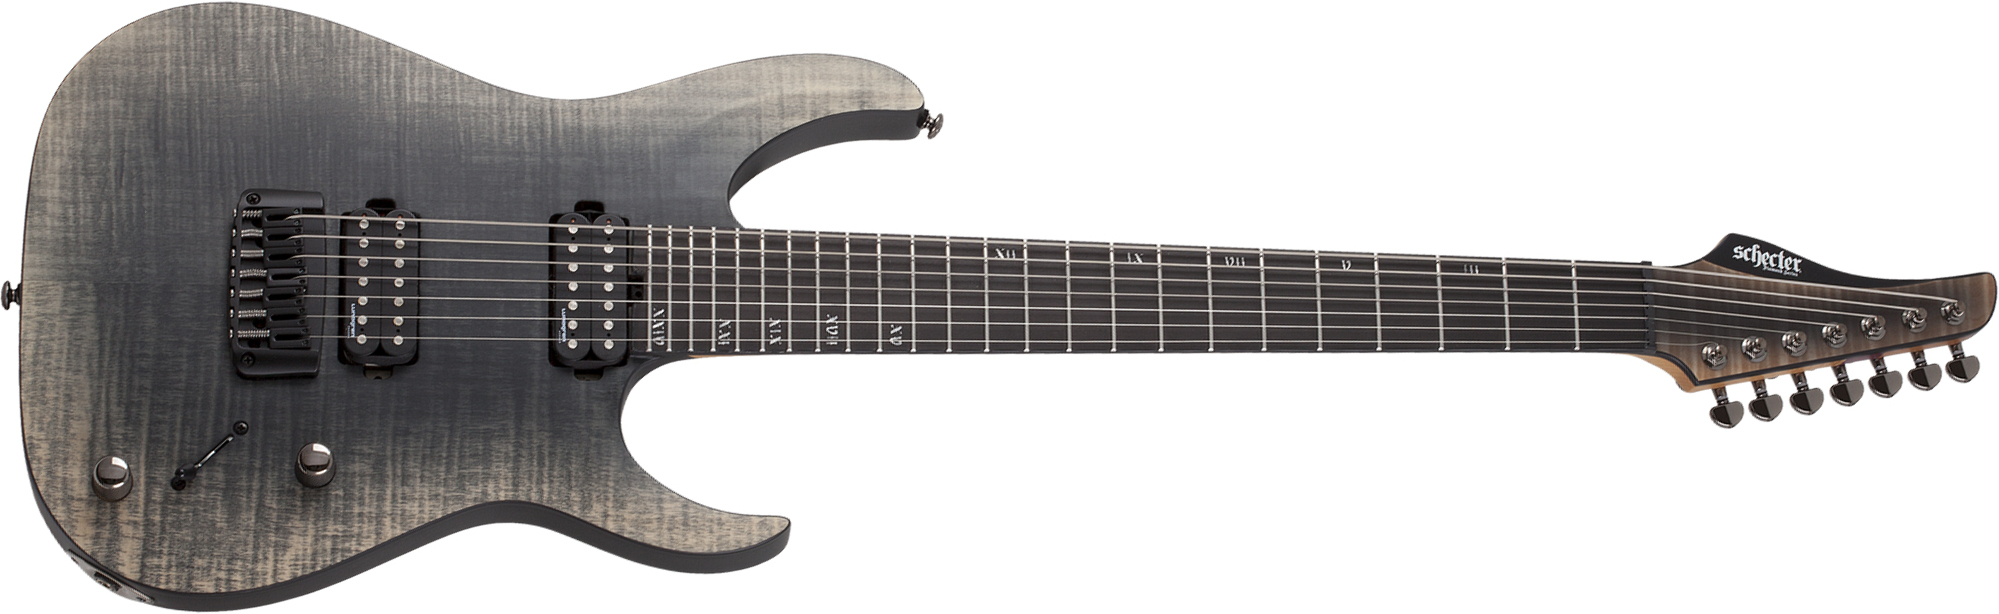 Schecter Banshee Mach-7 7c 2h Lundgren Ht Eb - Fallout Burst - 7 string electric guitar - Main picture